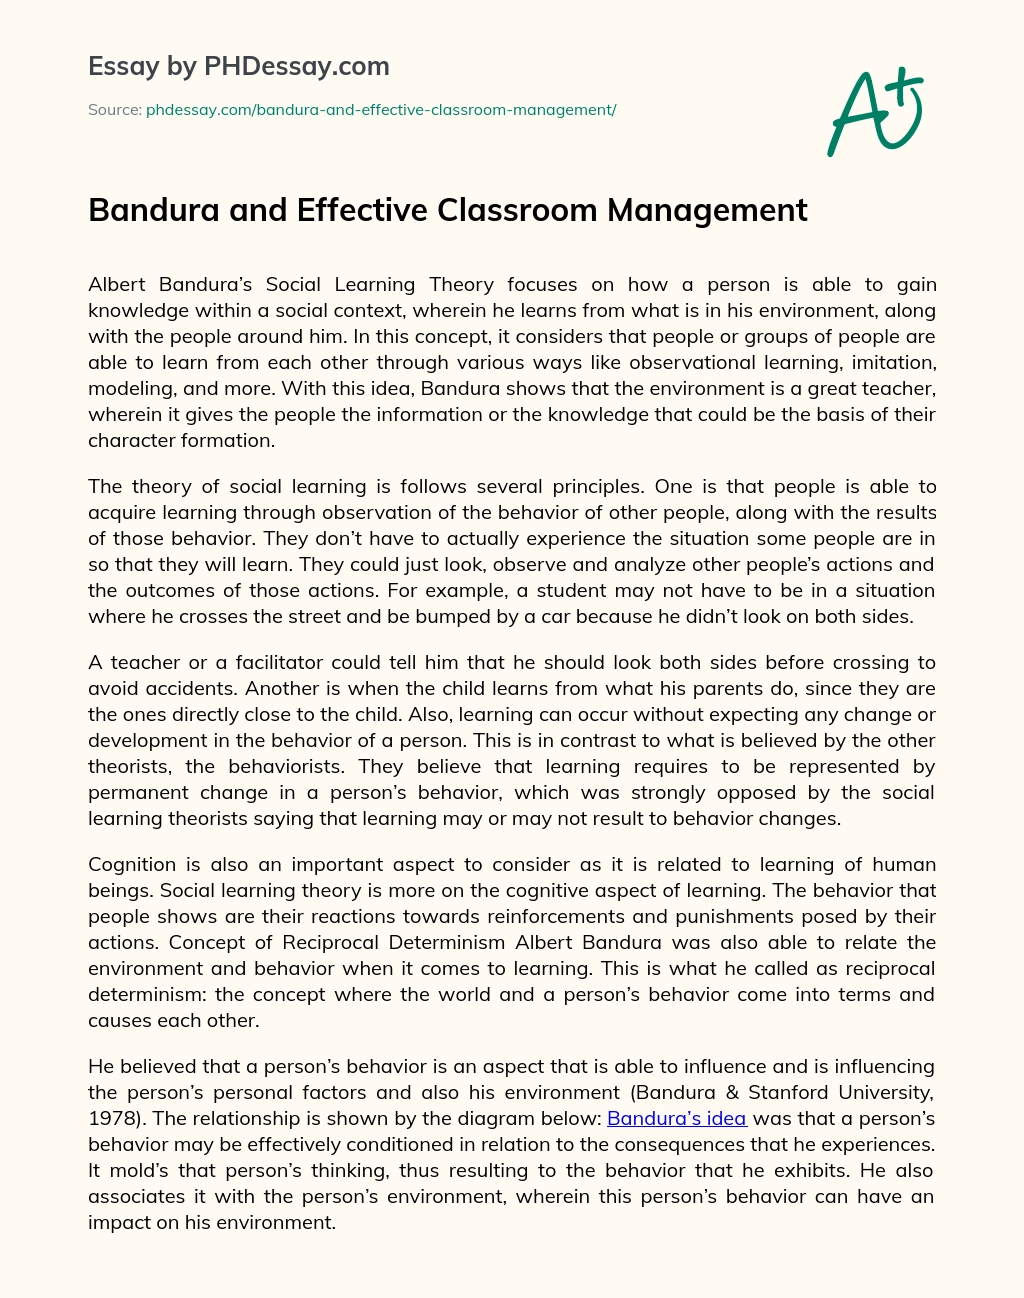 Bandura and Effective Classroom Management essay